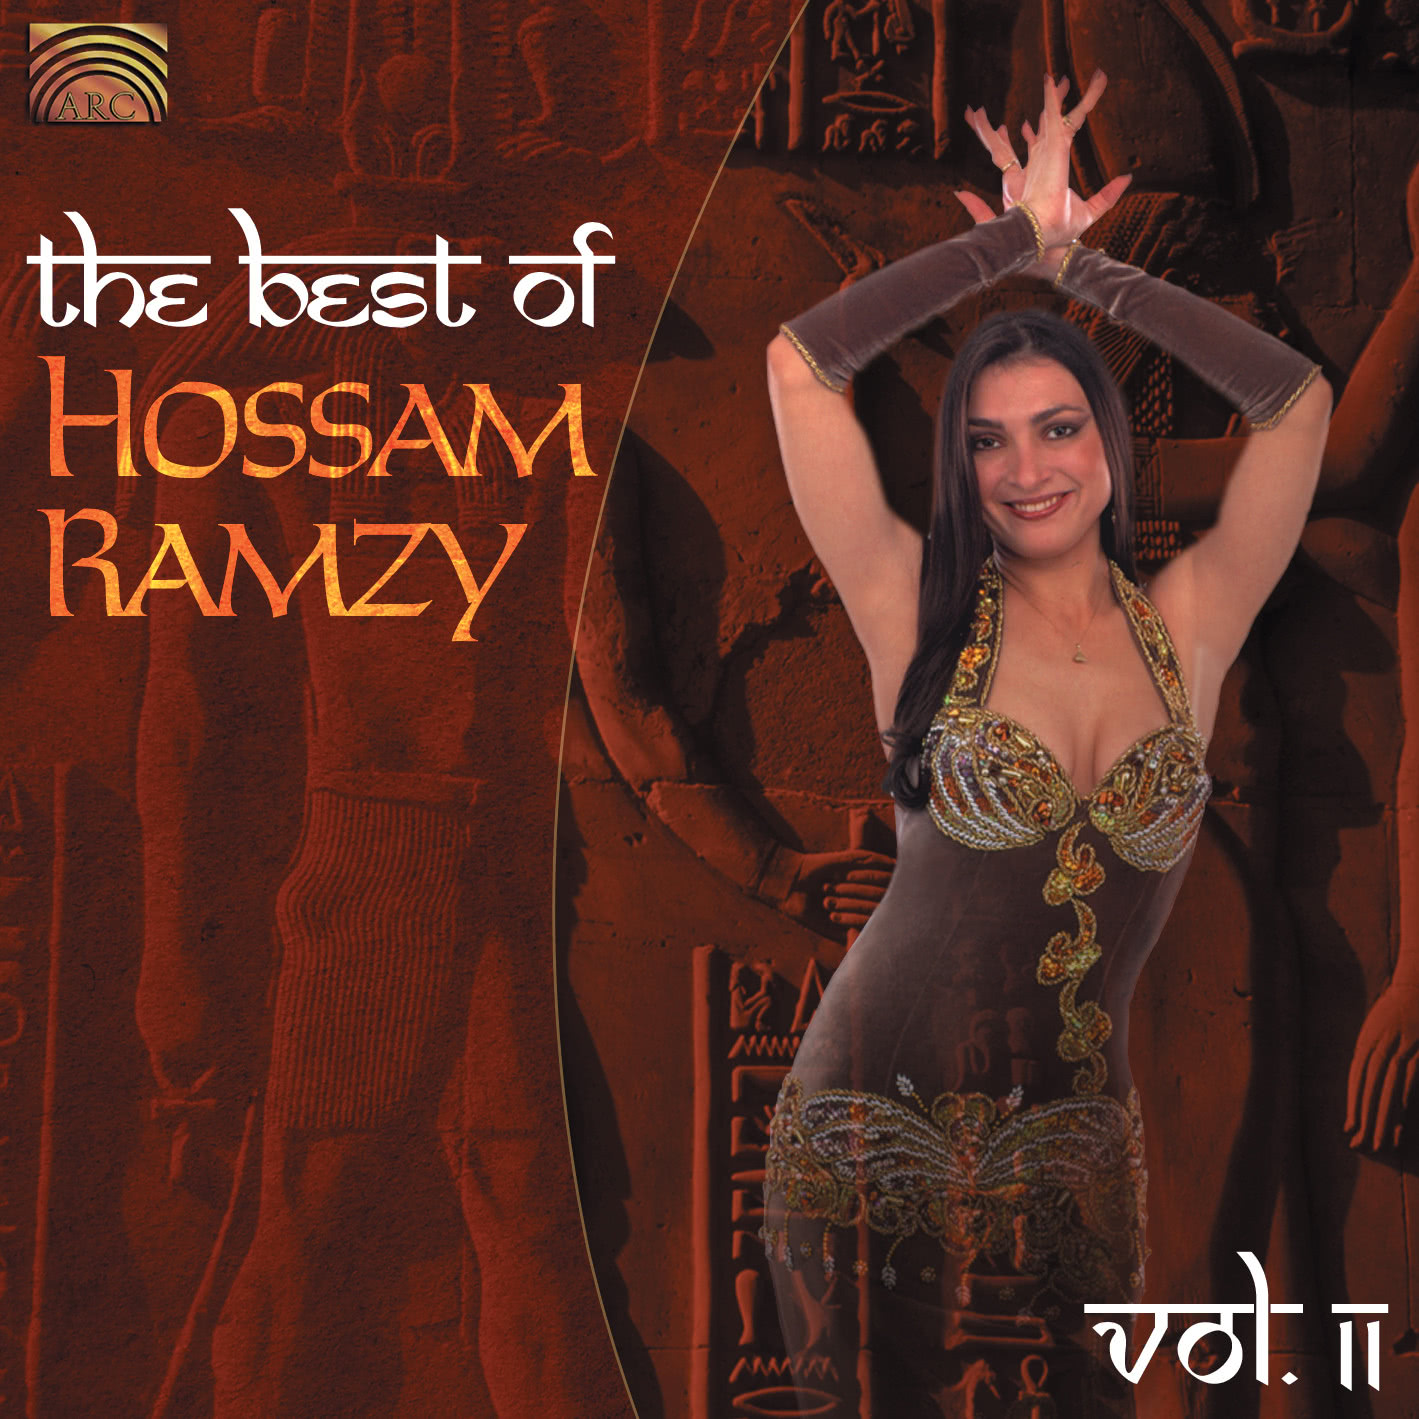 EUCD1921 The Best of Hossam Ramzy, Vol II